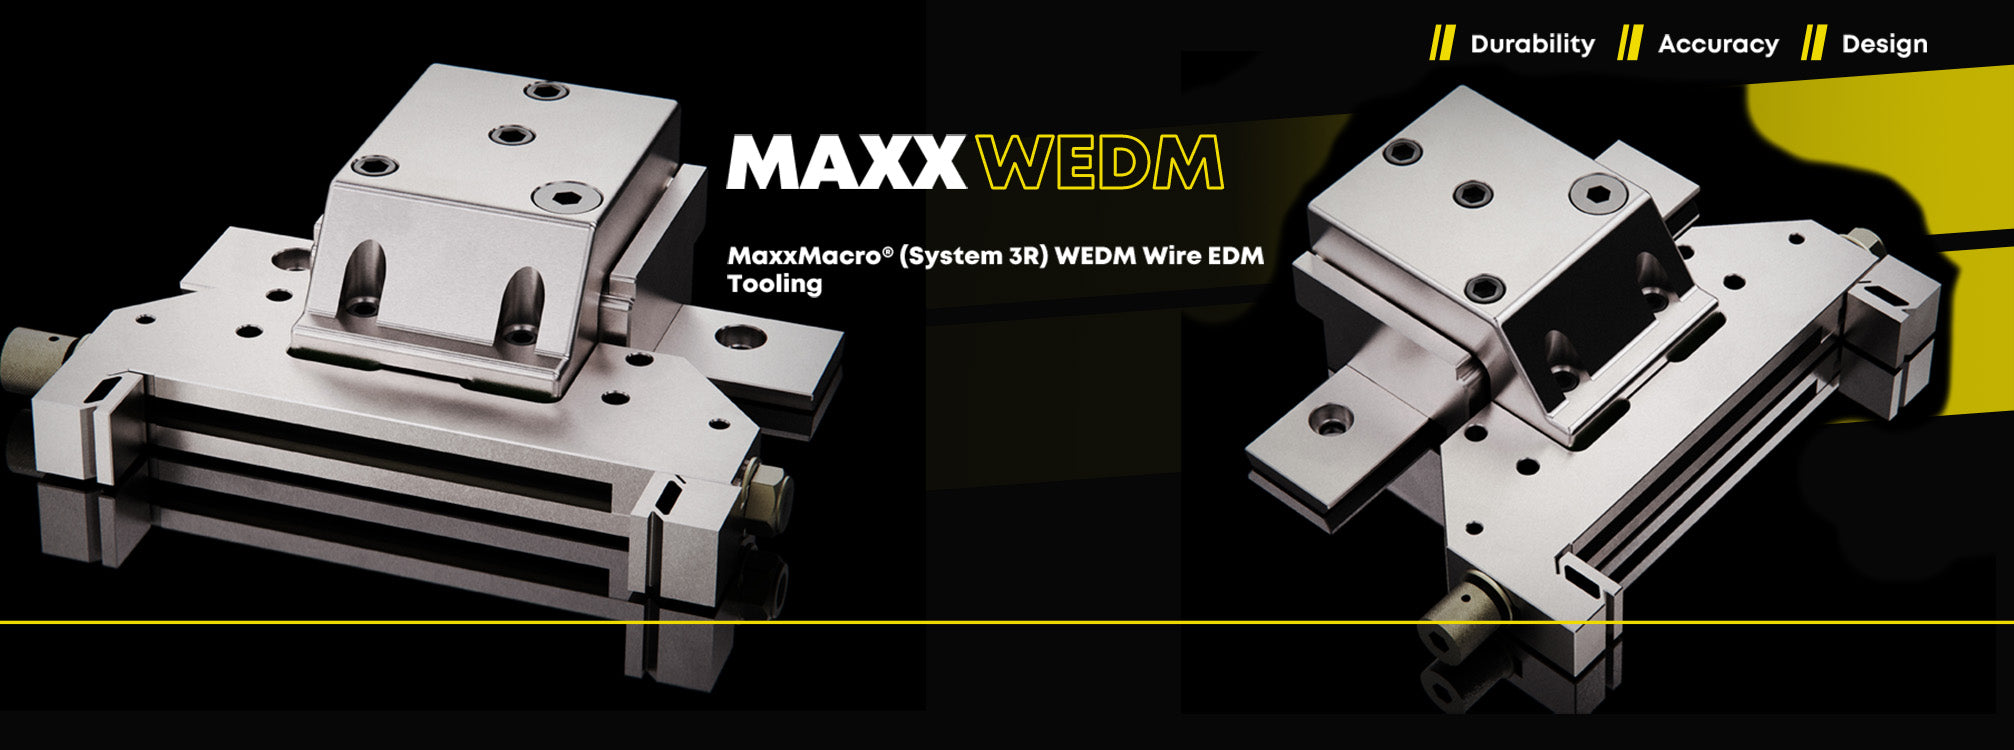 MaxxMacro (System 3R)  WEDM